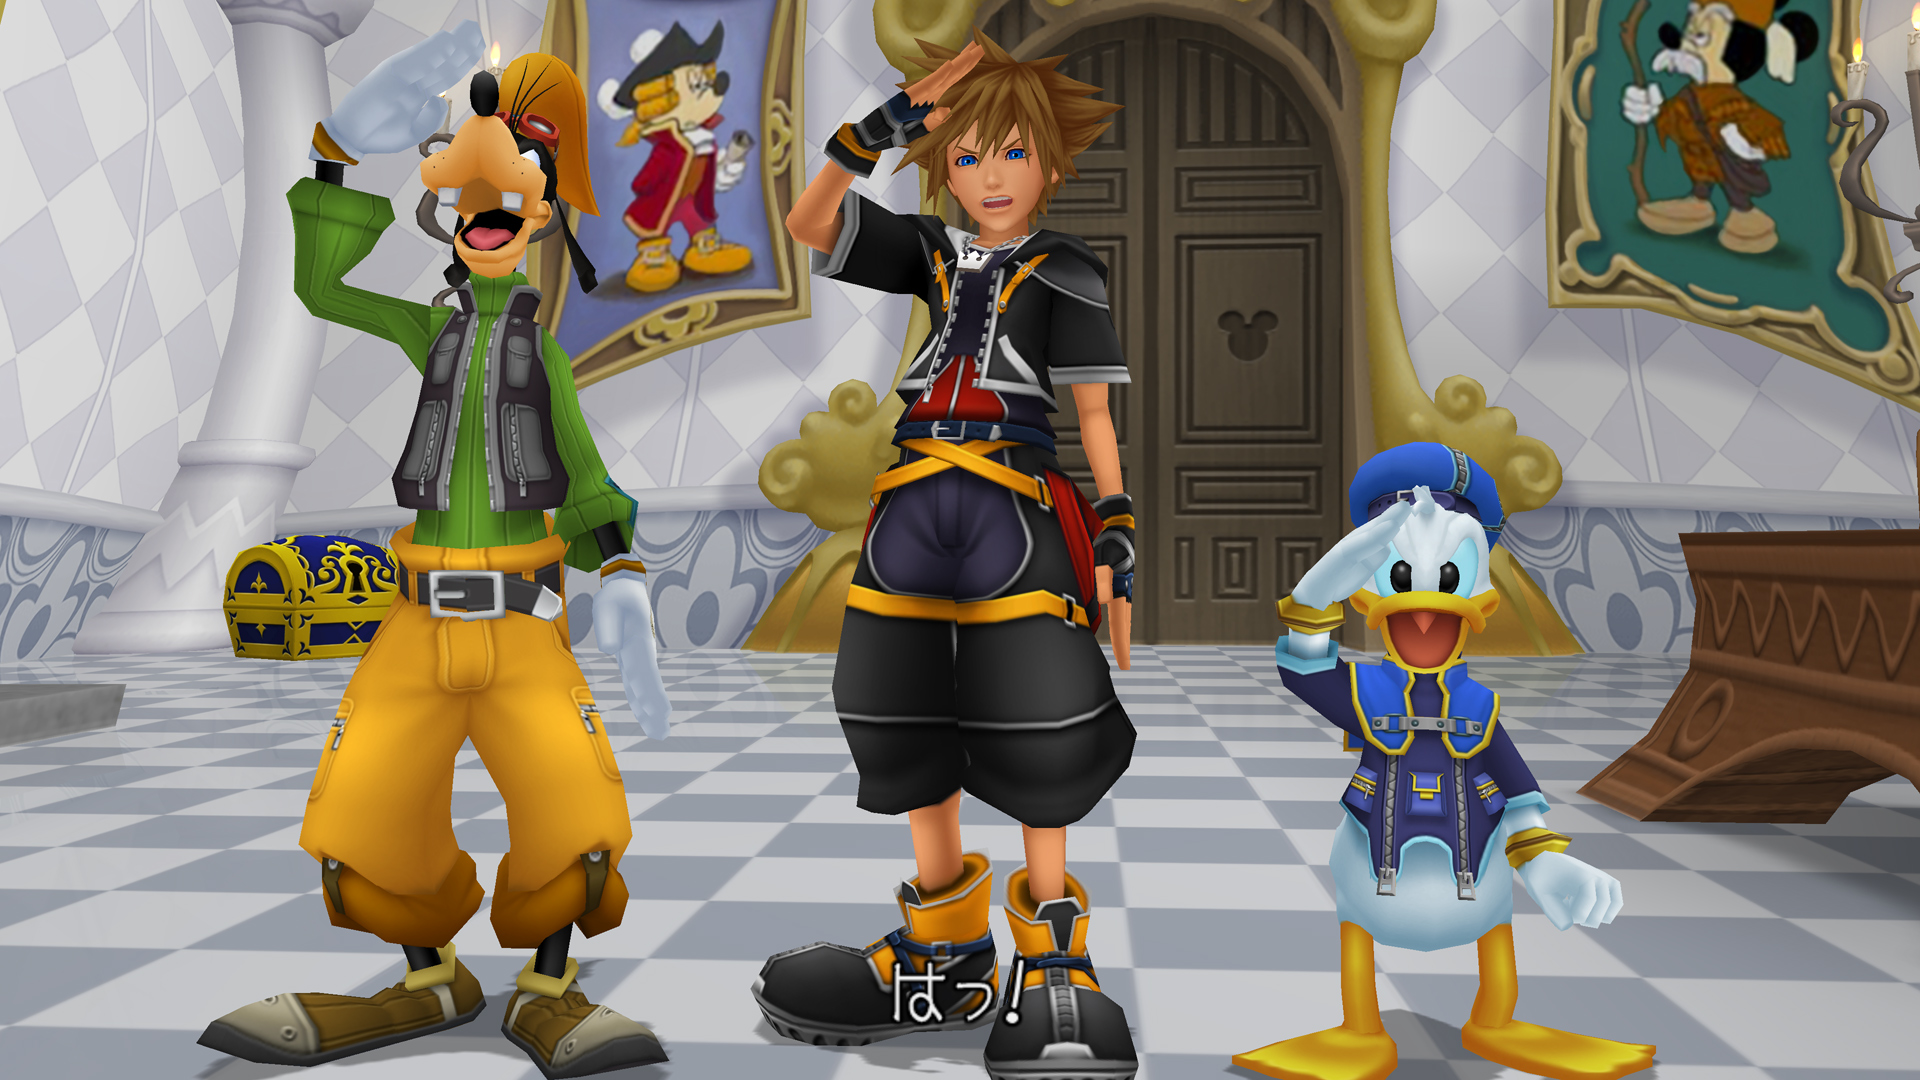 Square Enix Tokyo Game Show 2014 Kingdom Hearts 2.5 Sora, Donald, and Goofy